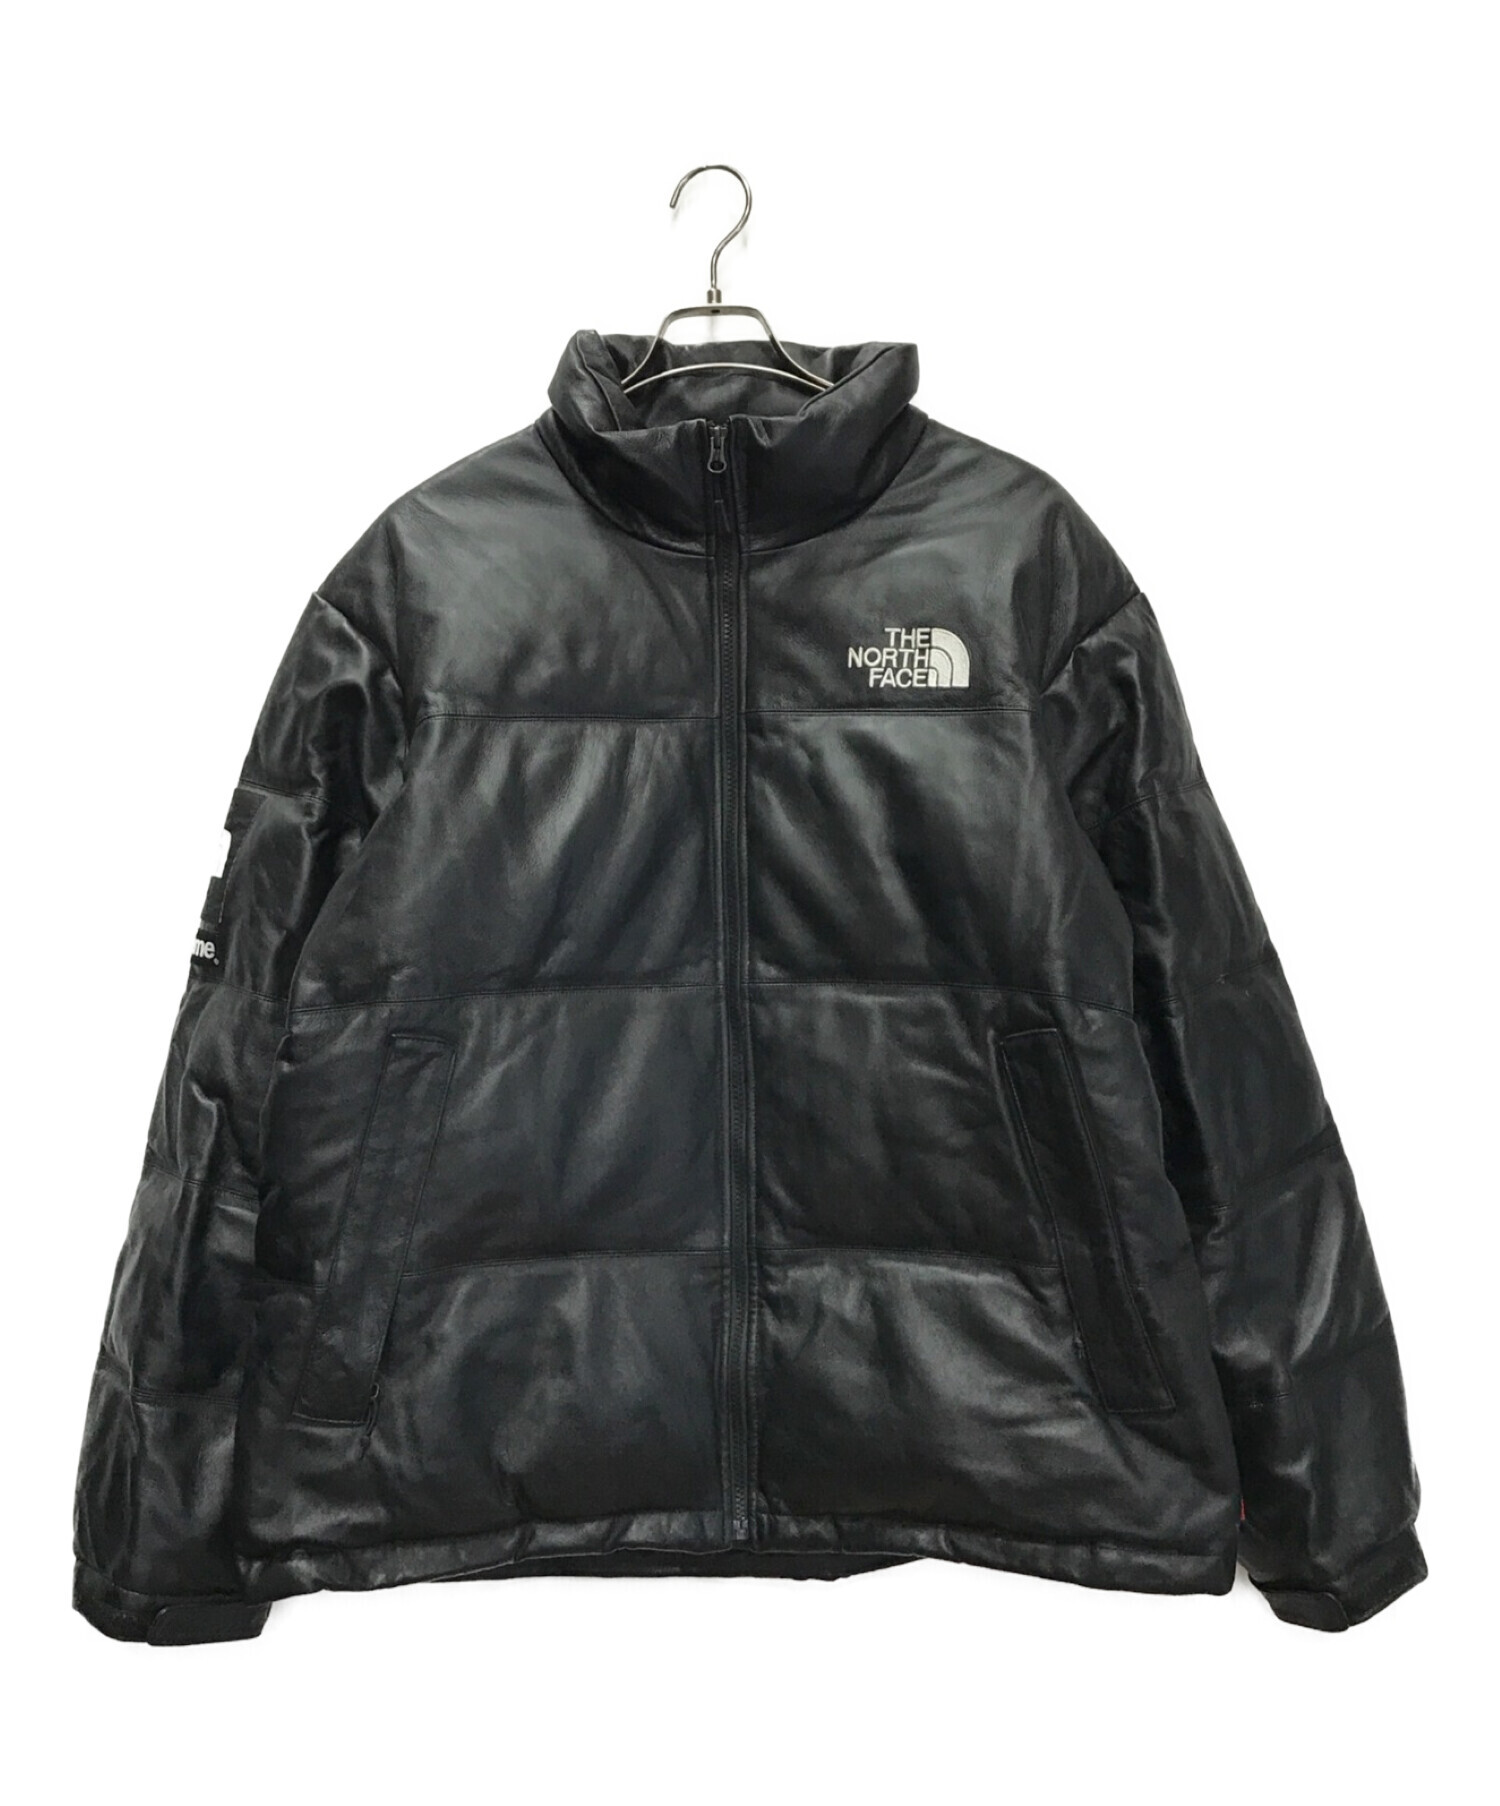 supreme tnf  leather nuptse jacket Sサイズ